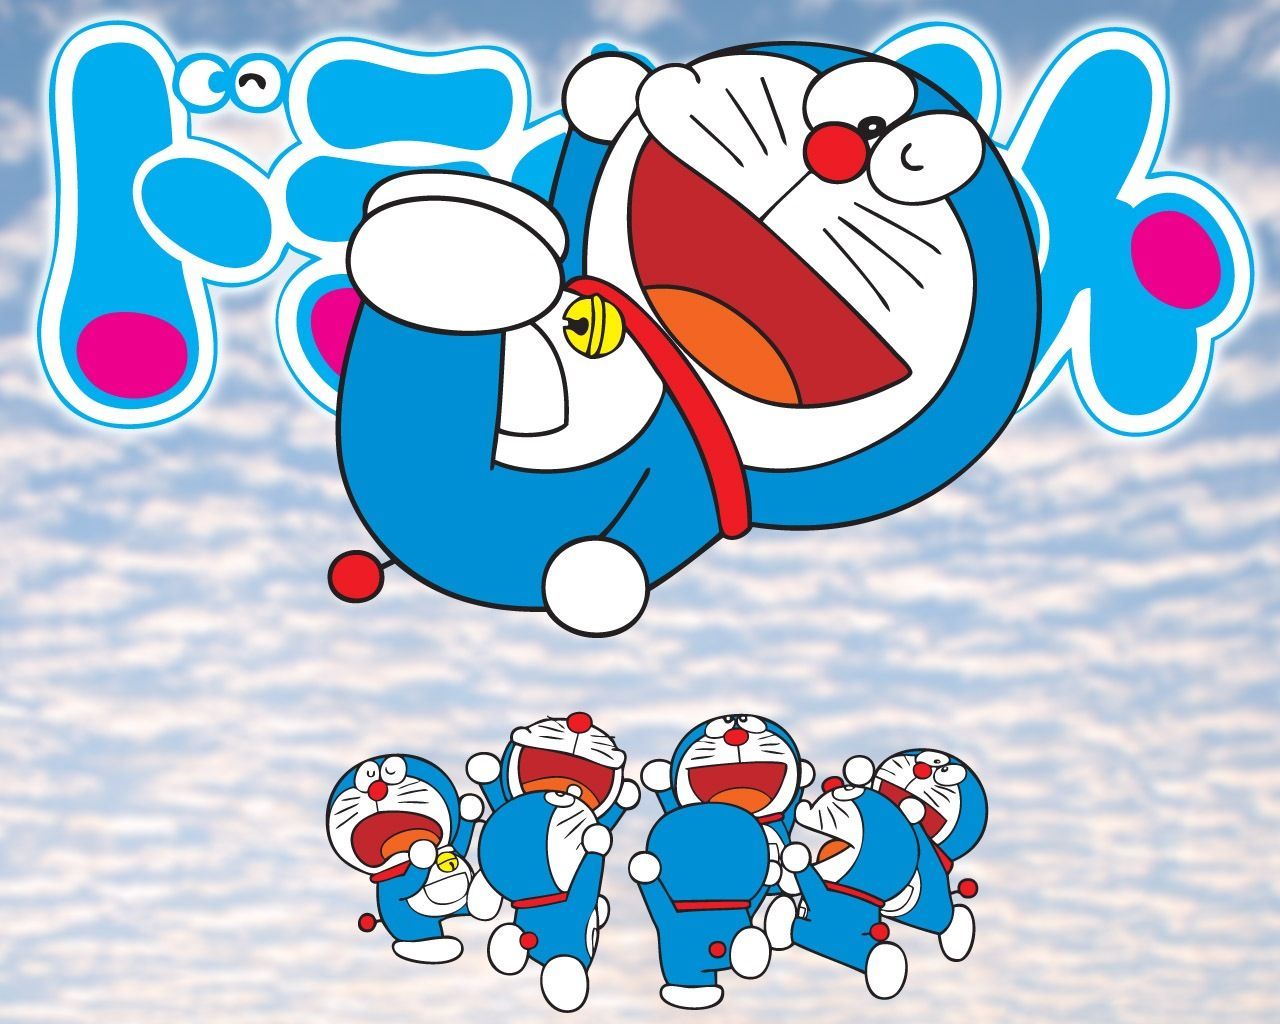 Doraemon Picture Download - 1280x1024 Wallpaper 